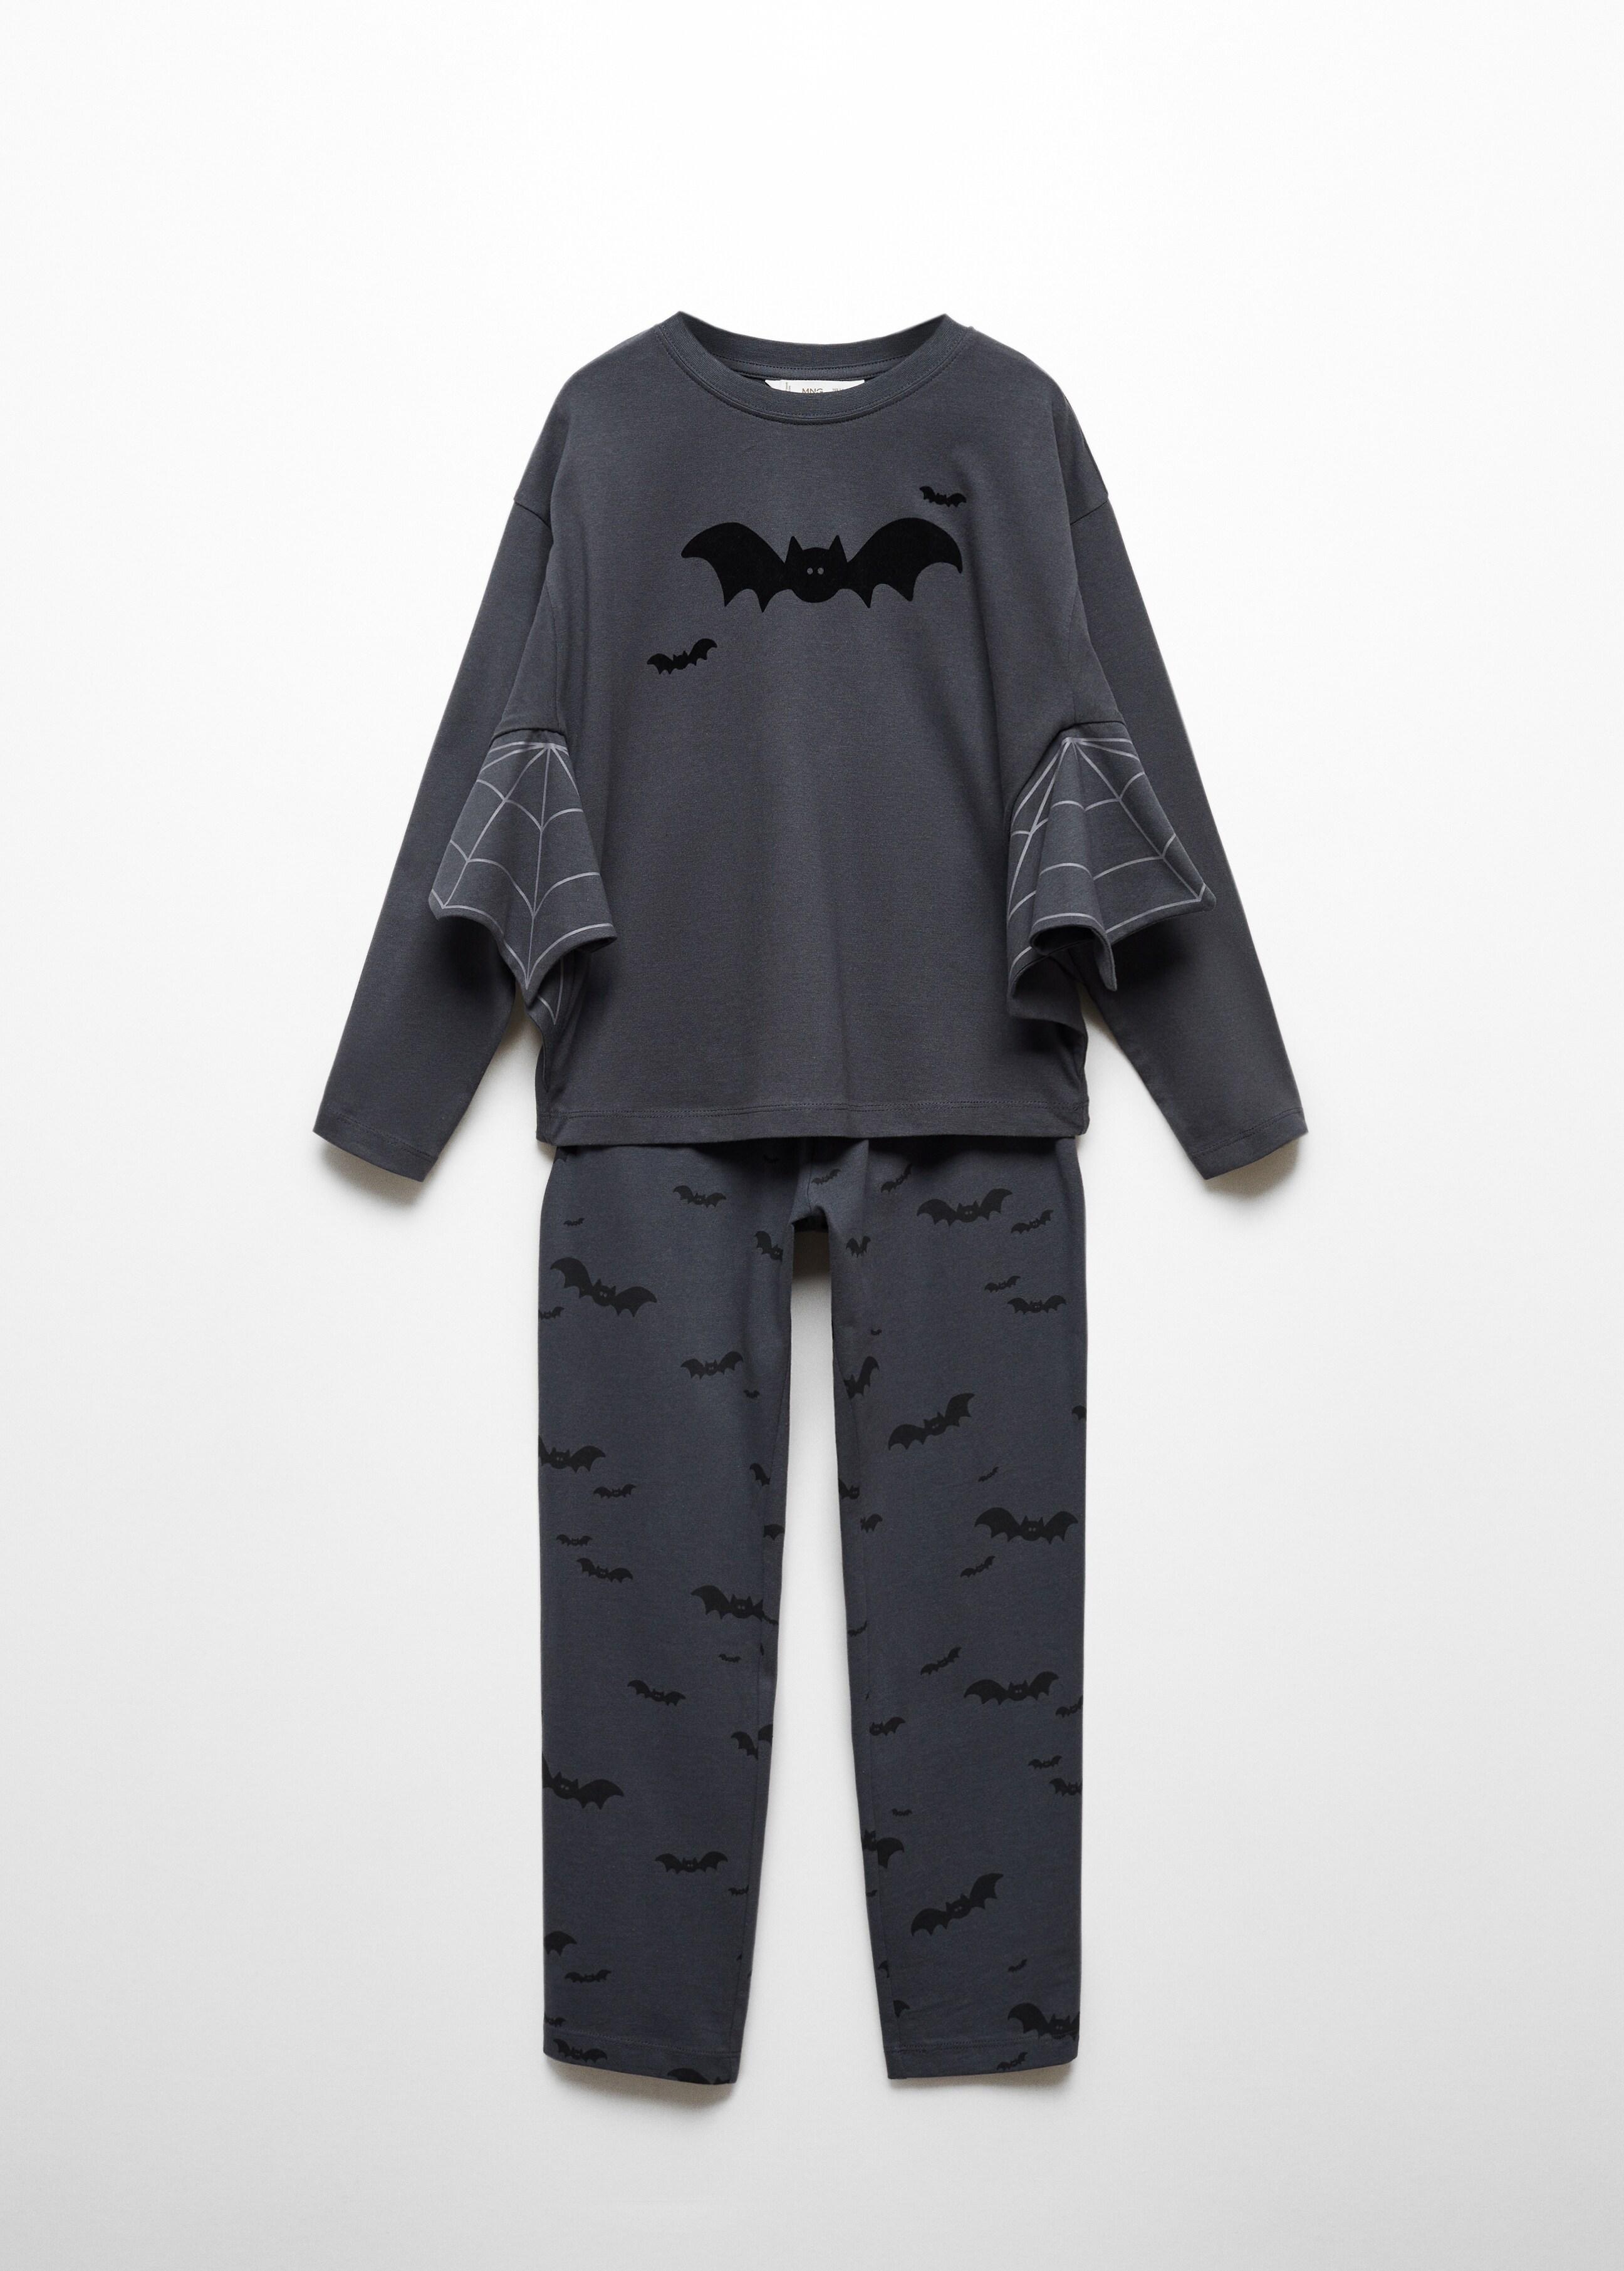 Pijama largo murciélago - Artículo sin modelo